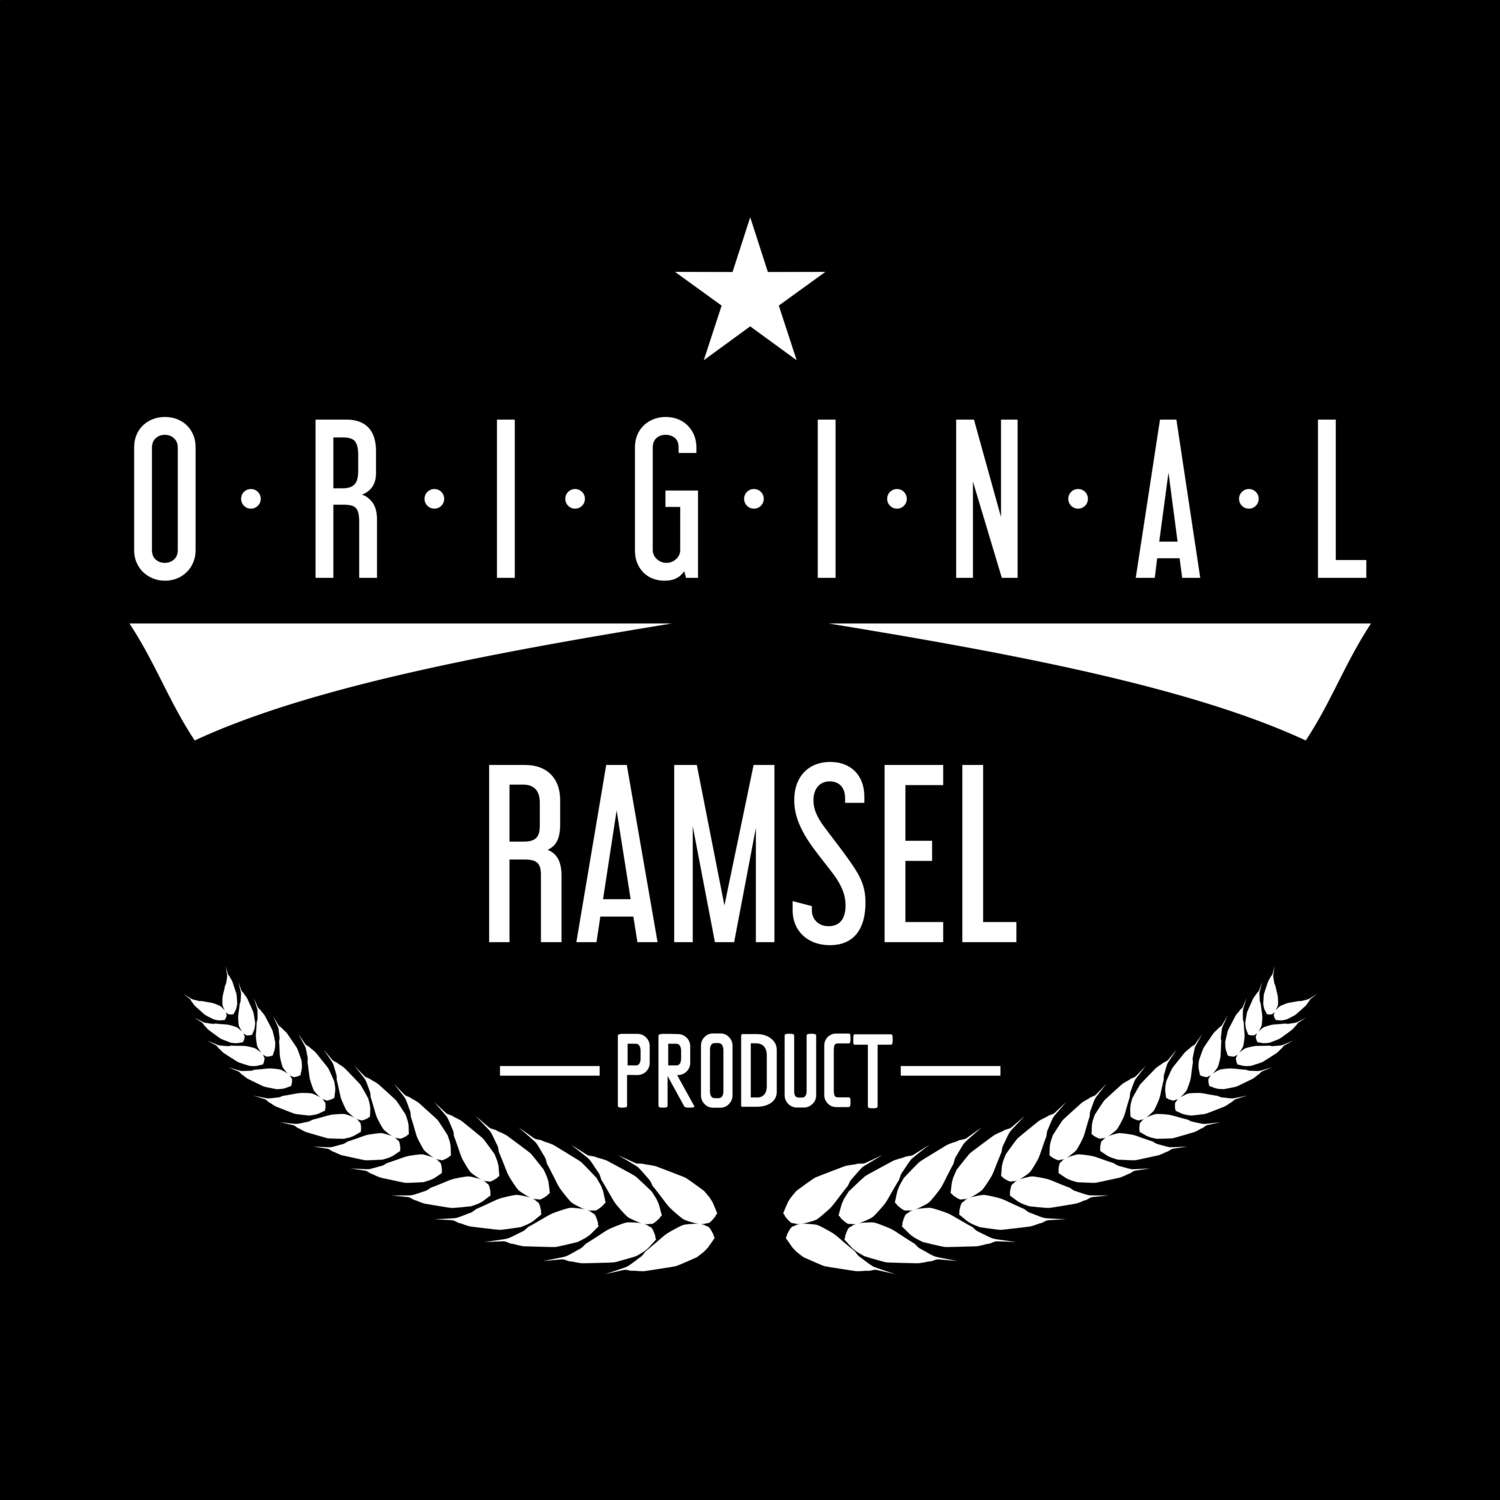 Ramsel T-Shirt »Original Product«